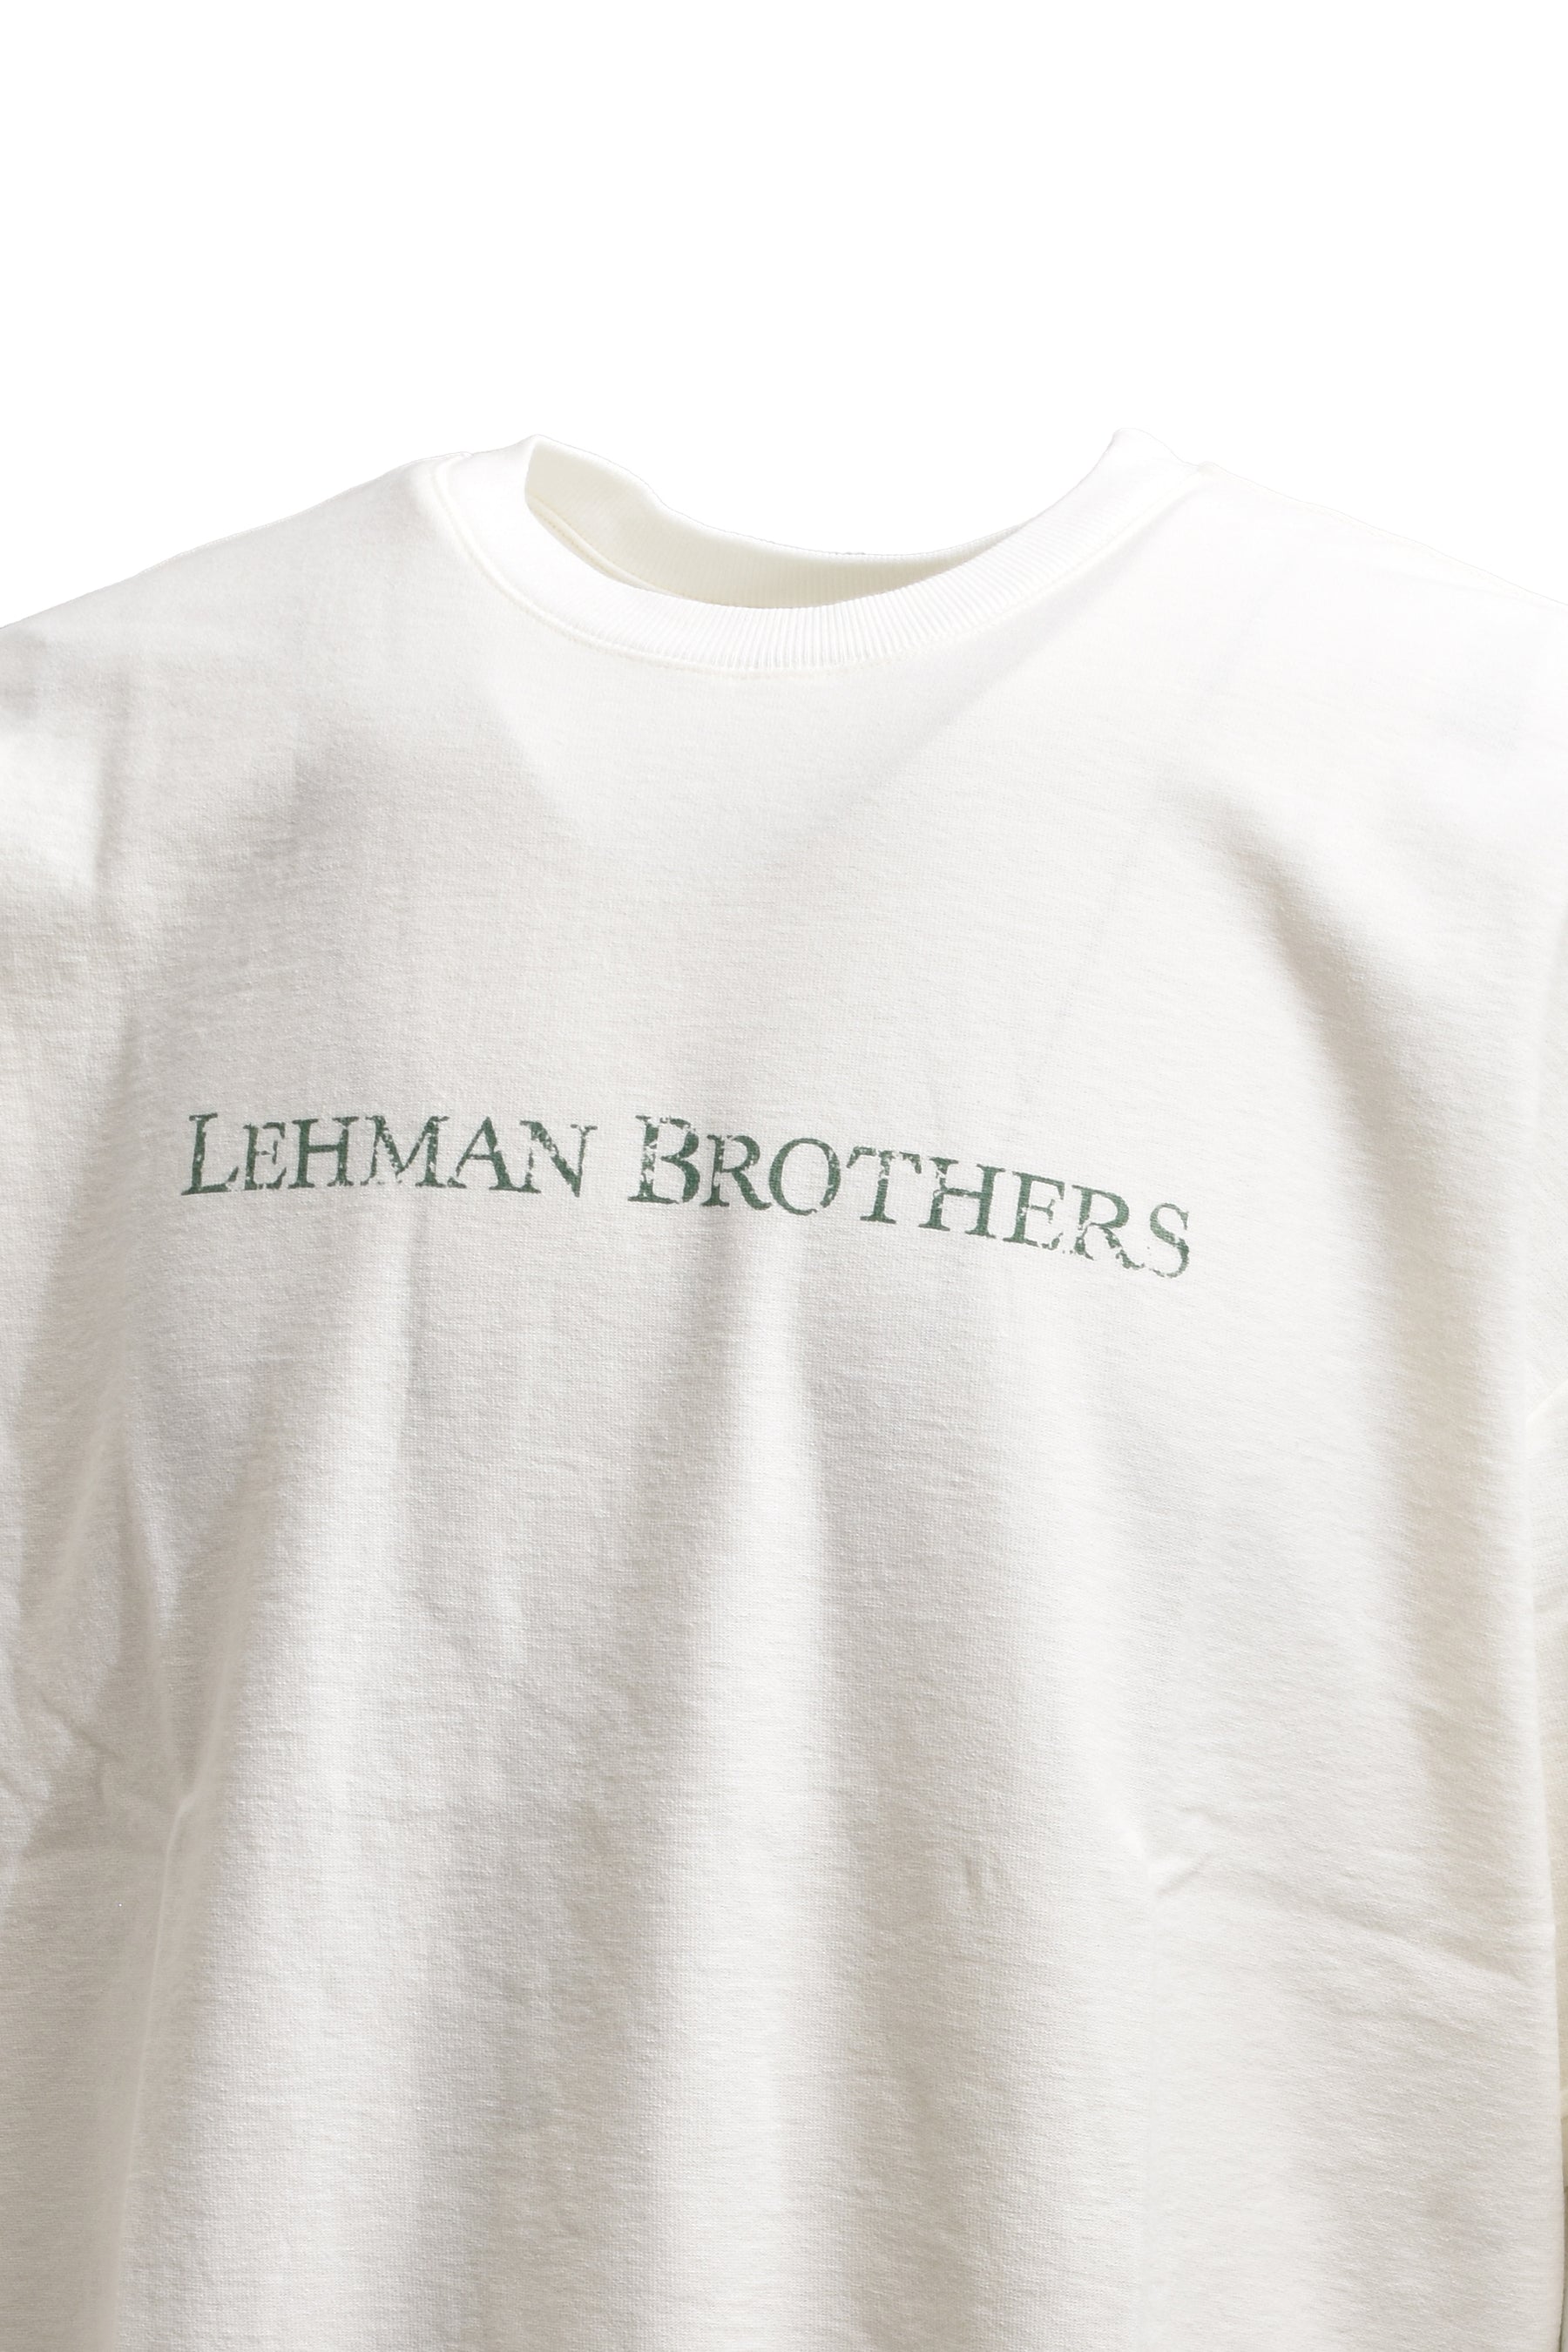 LEHMAN BROTHERS T-SHIRT / VTG WHT